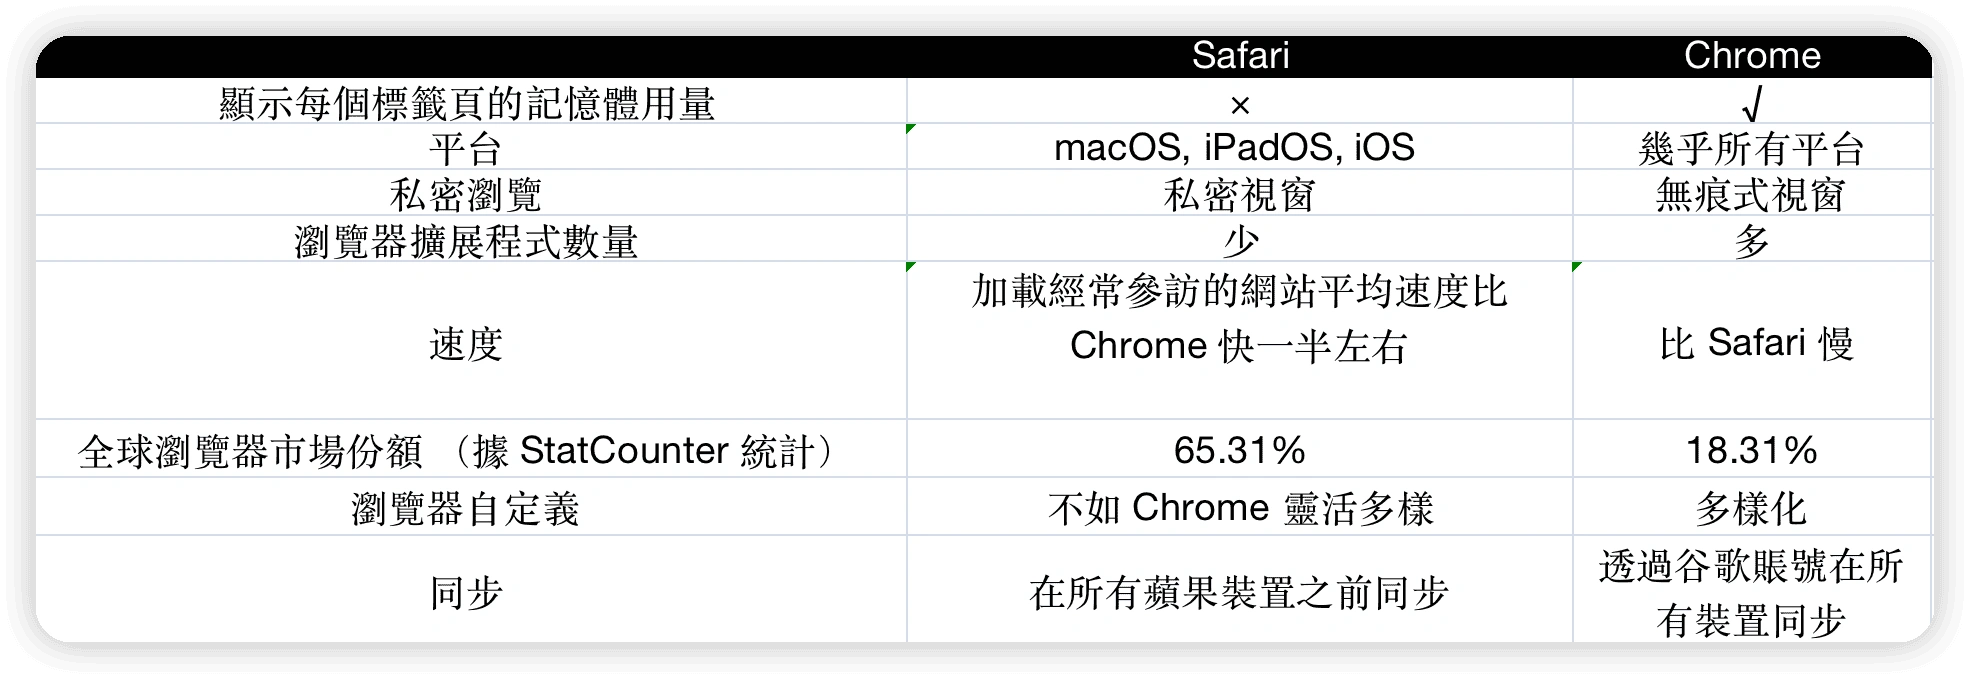 Safari 與 Chrome 對比